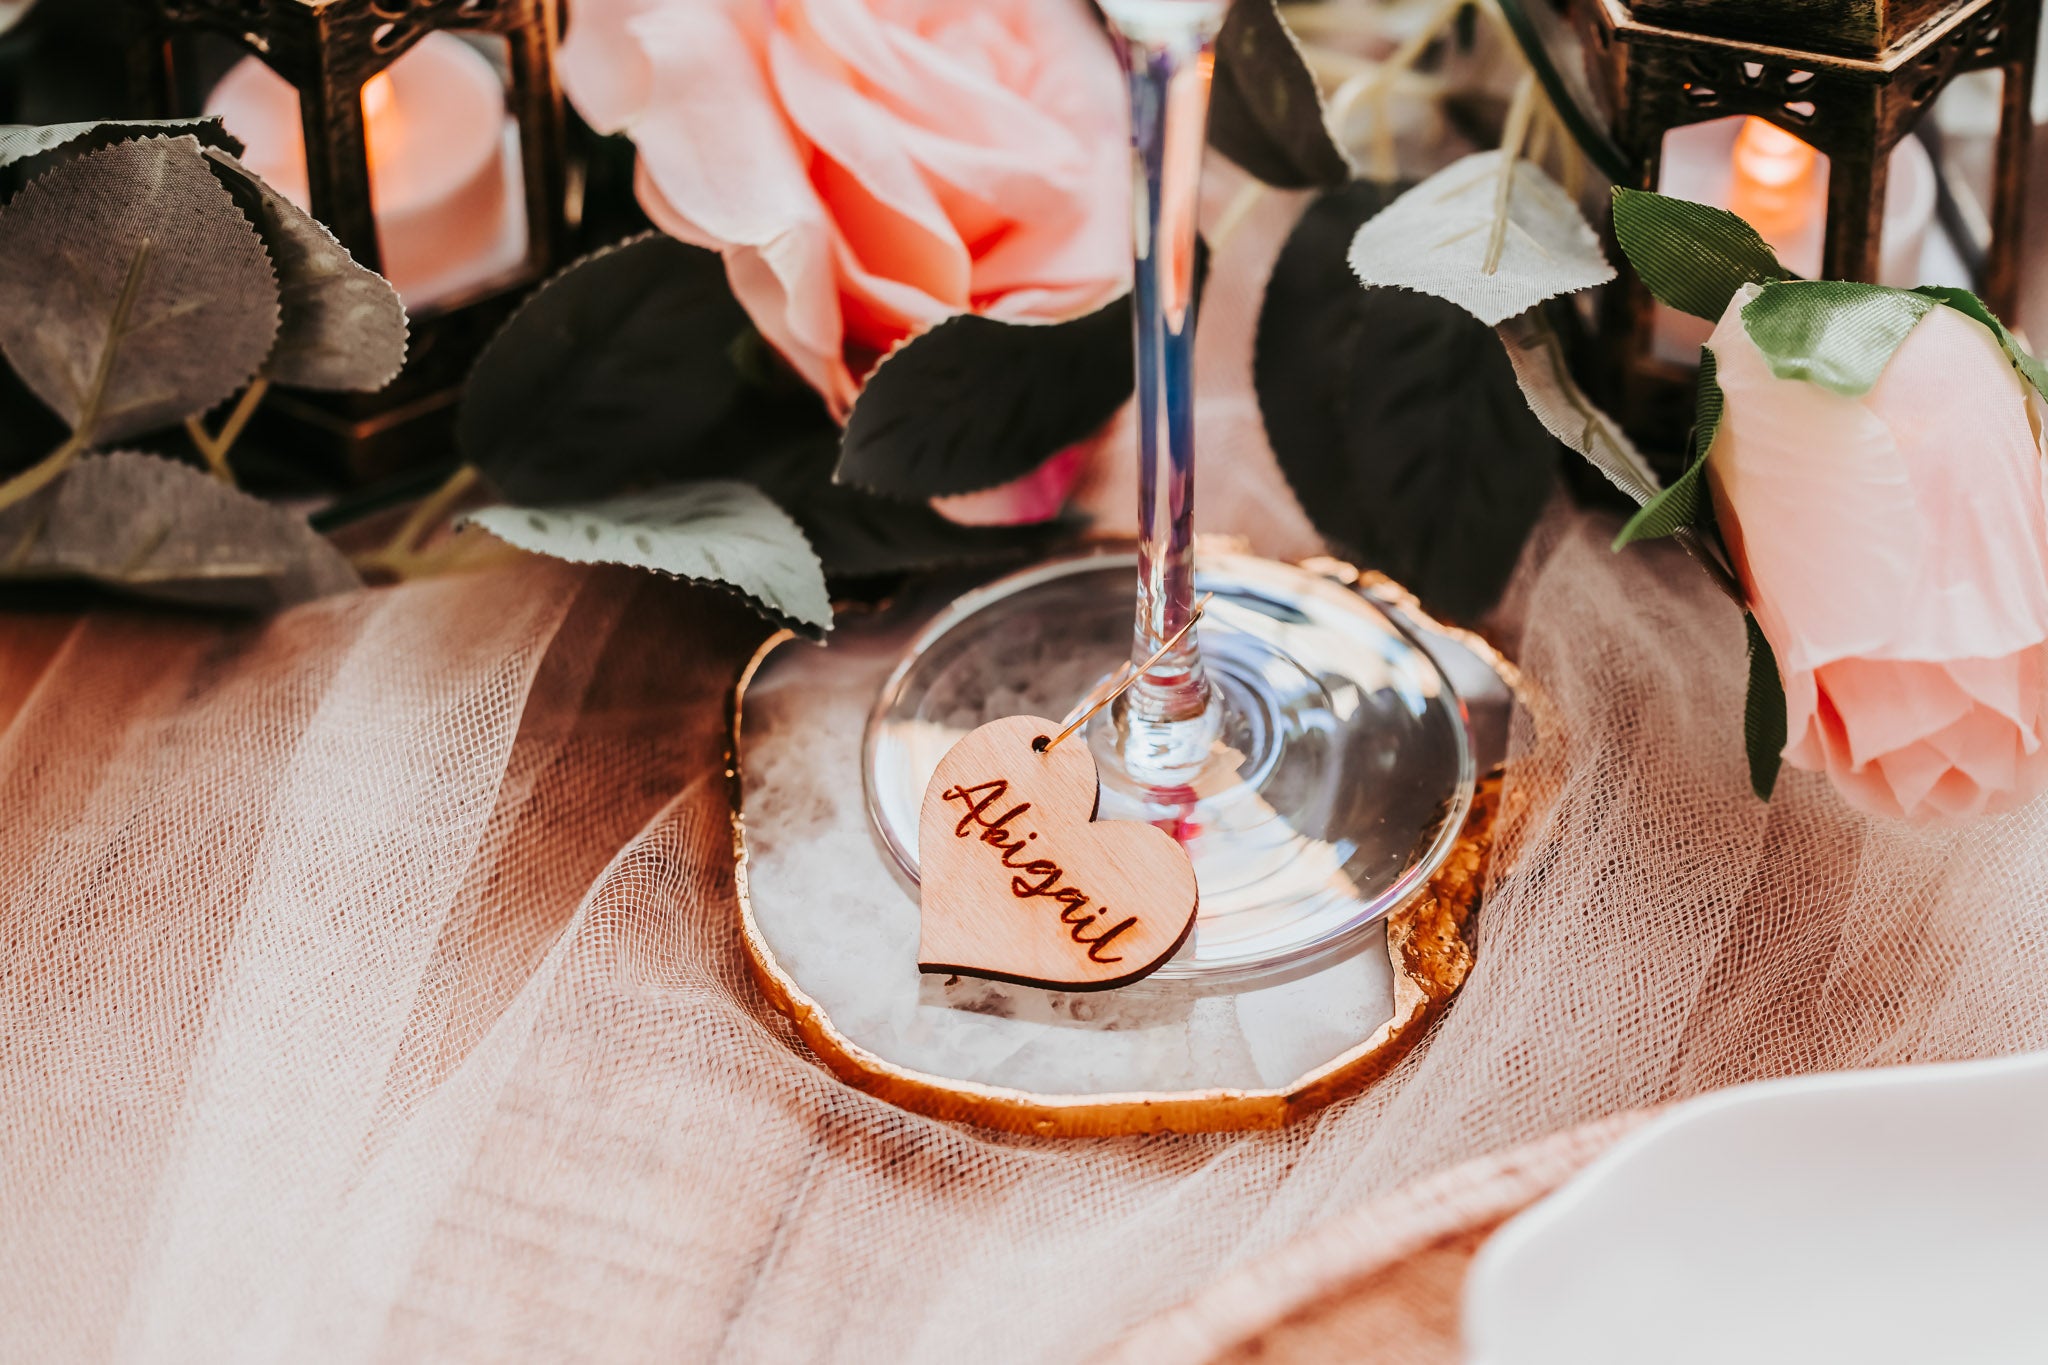 Cute Heart Shaped Wine Glass Charm Place Setting For Birthdays Weddings